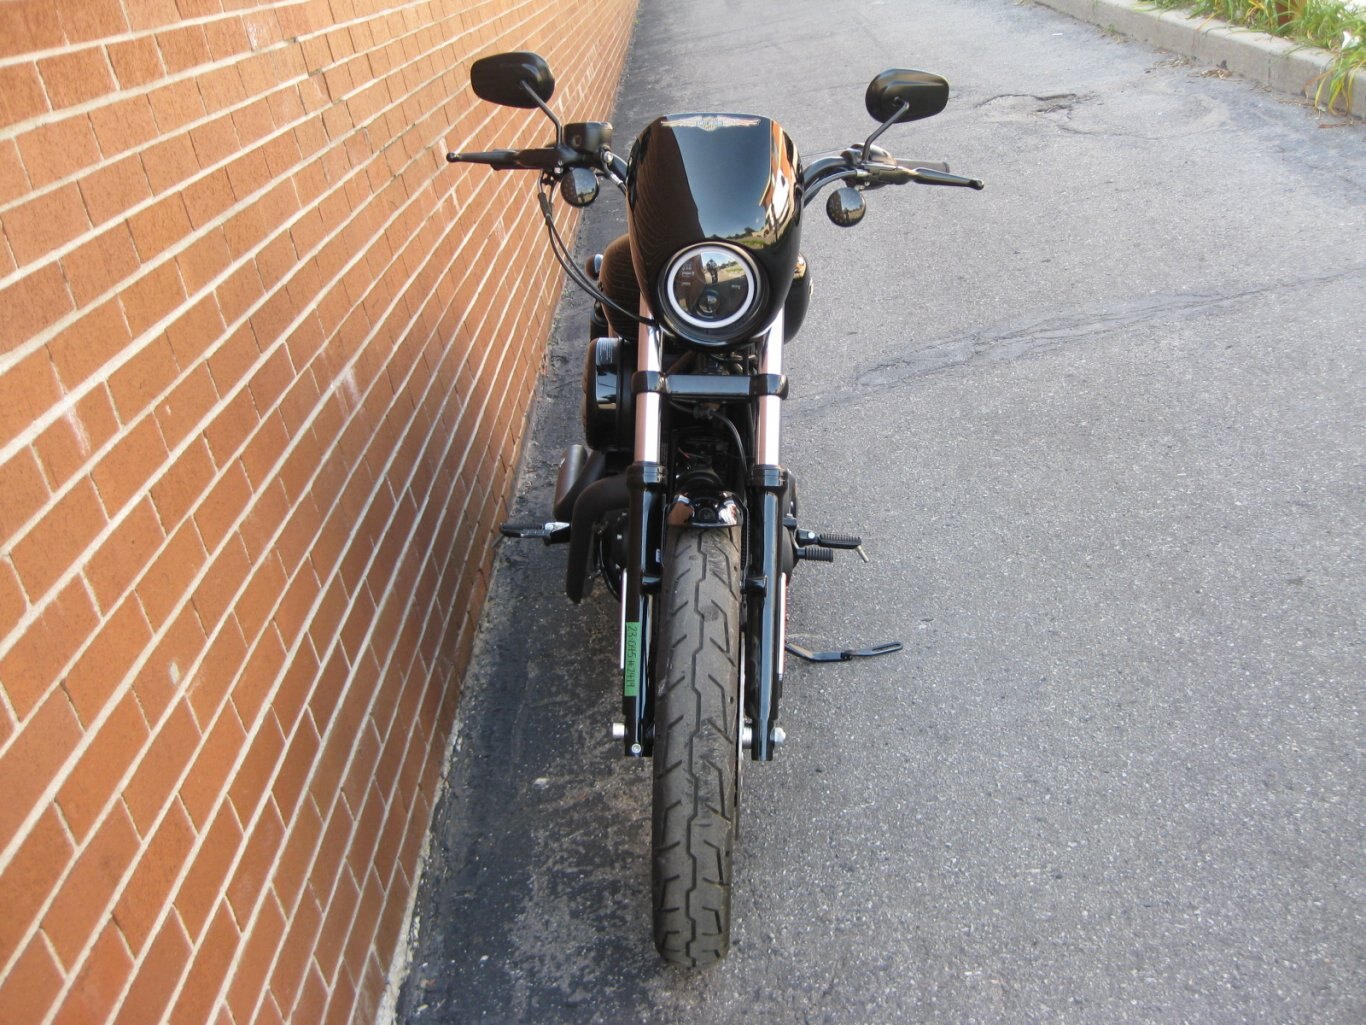 2020 Harley Davidson XL883N Iron